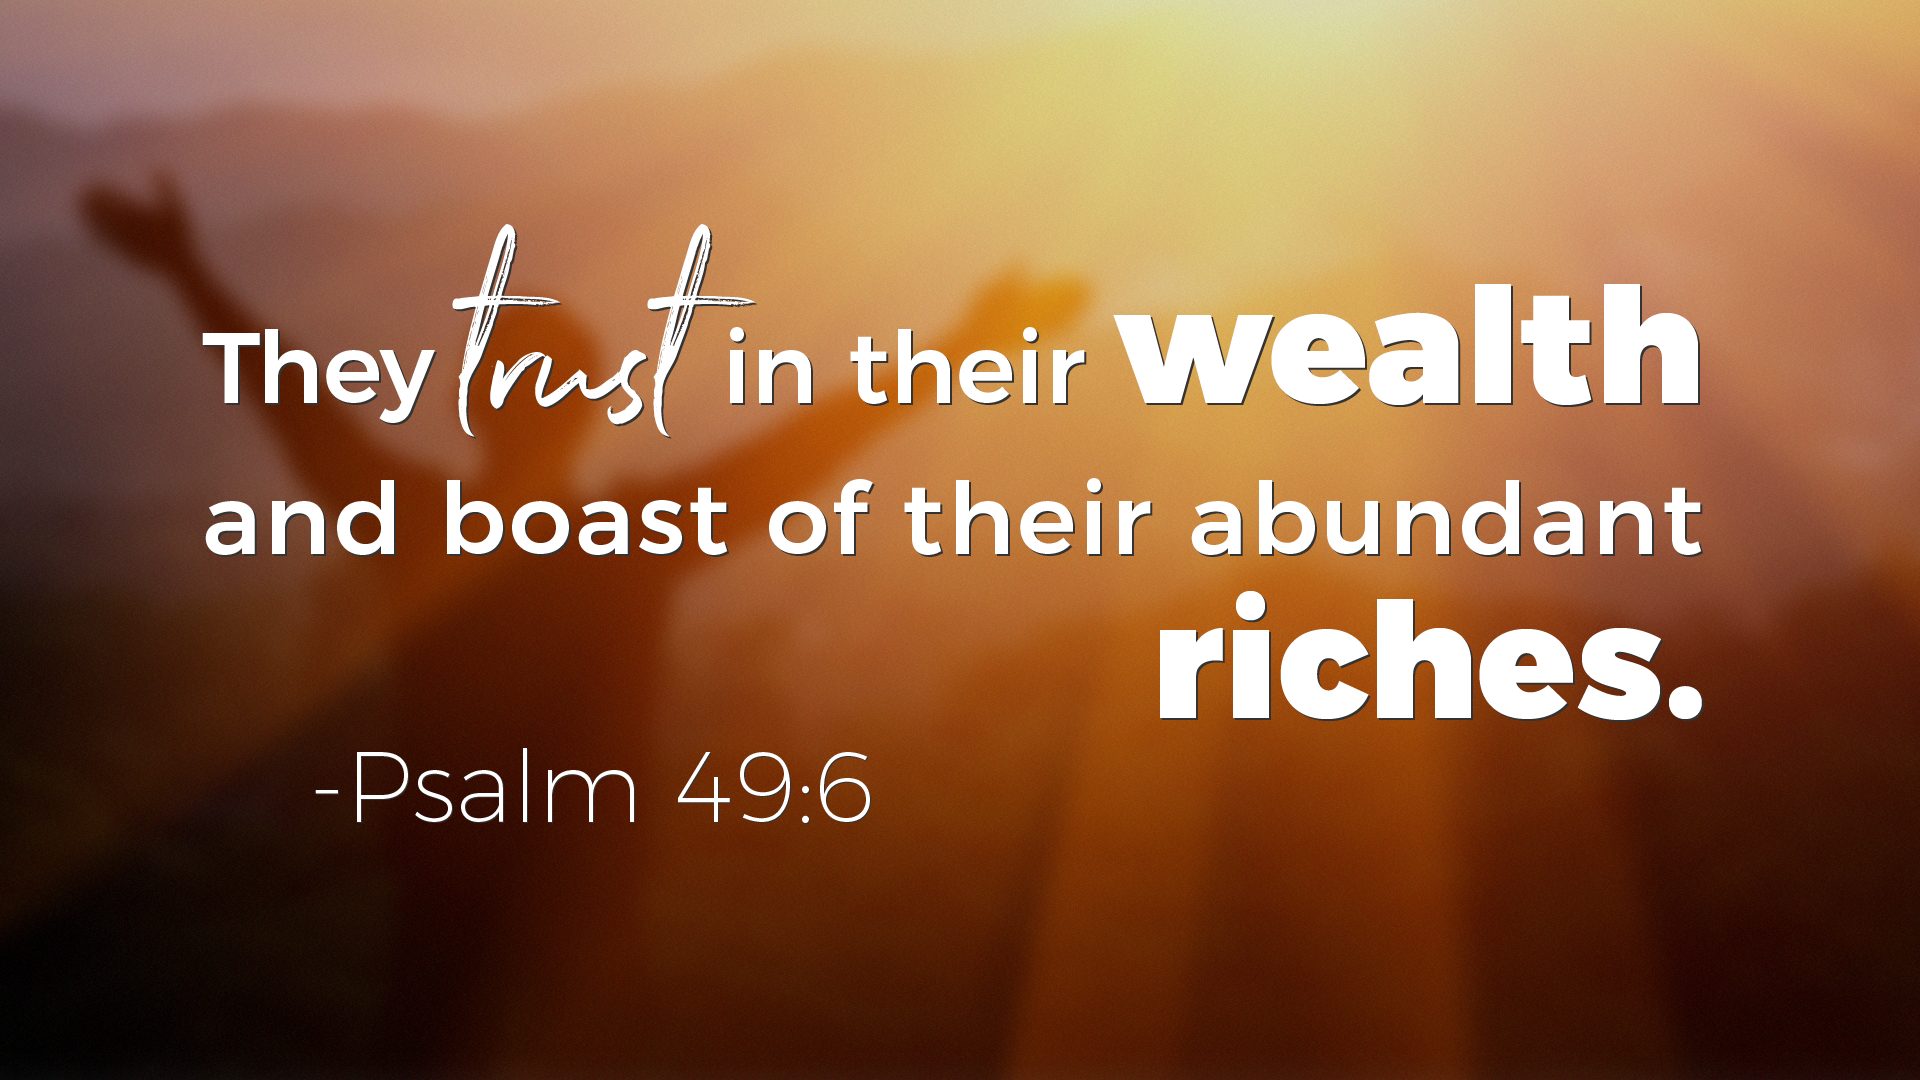 Psalms on Wealth - Psalm 49:6